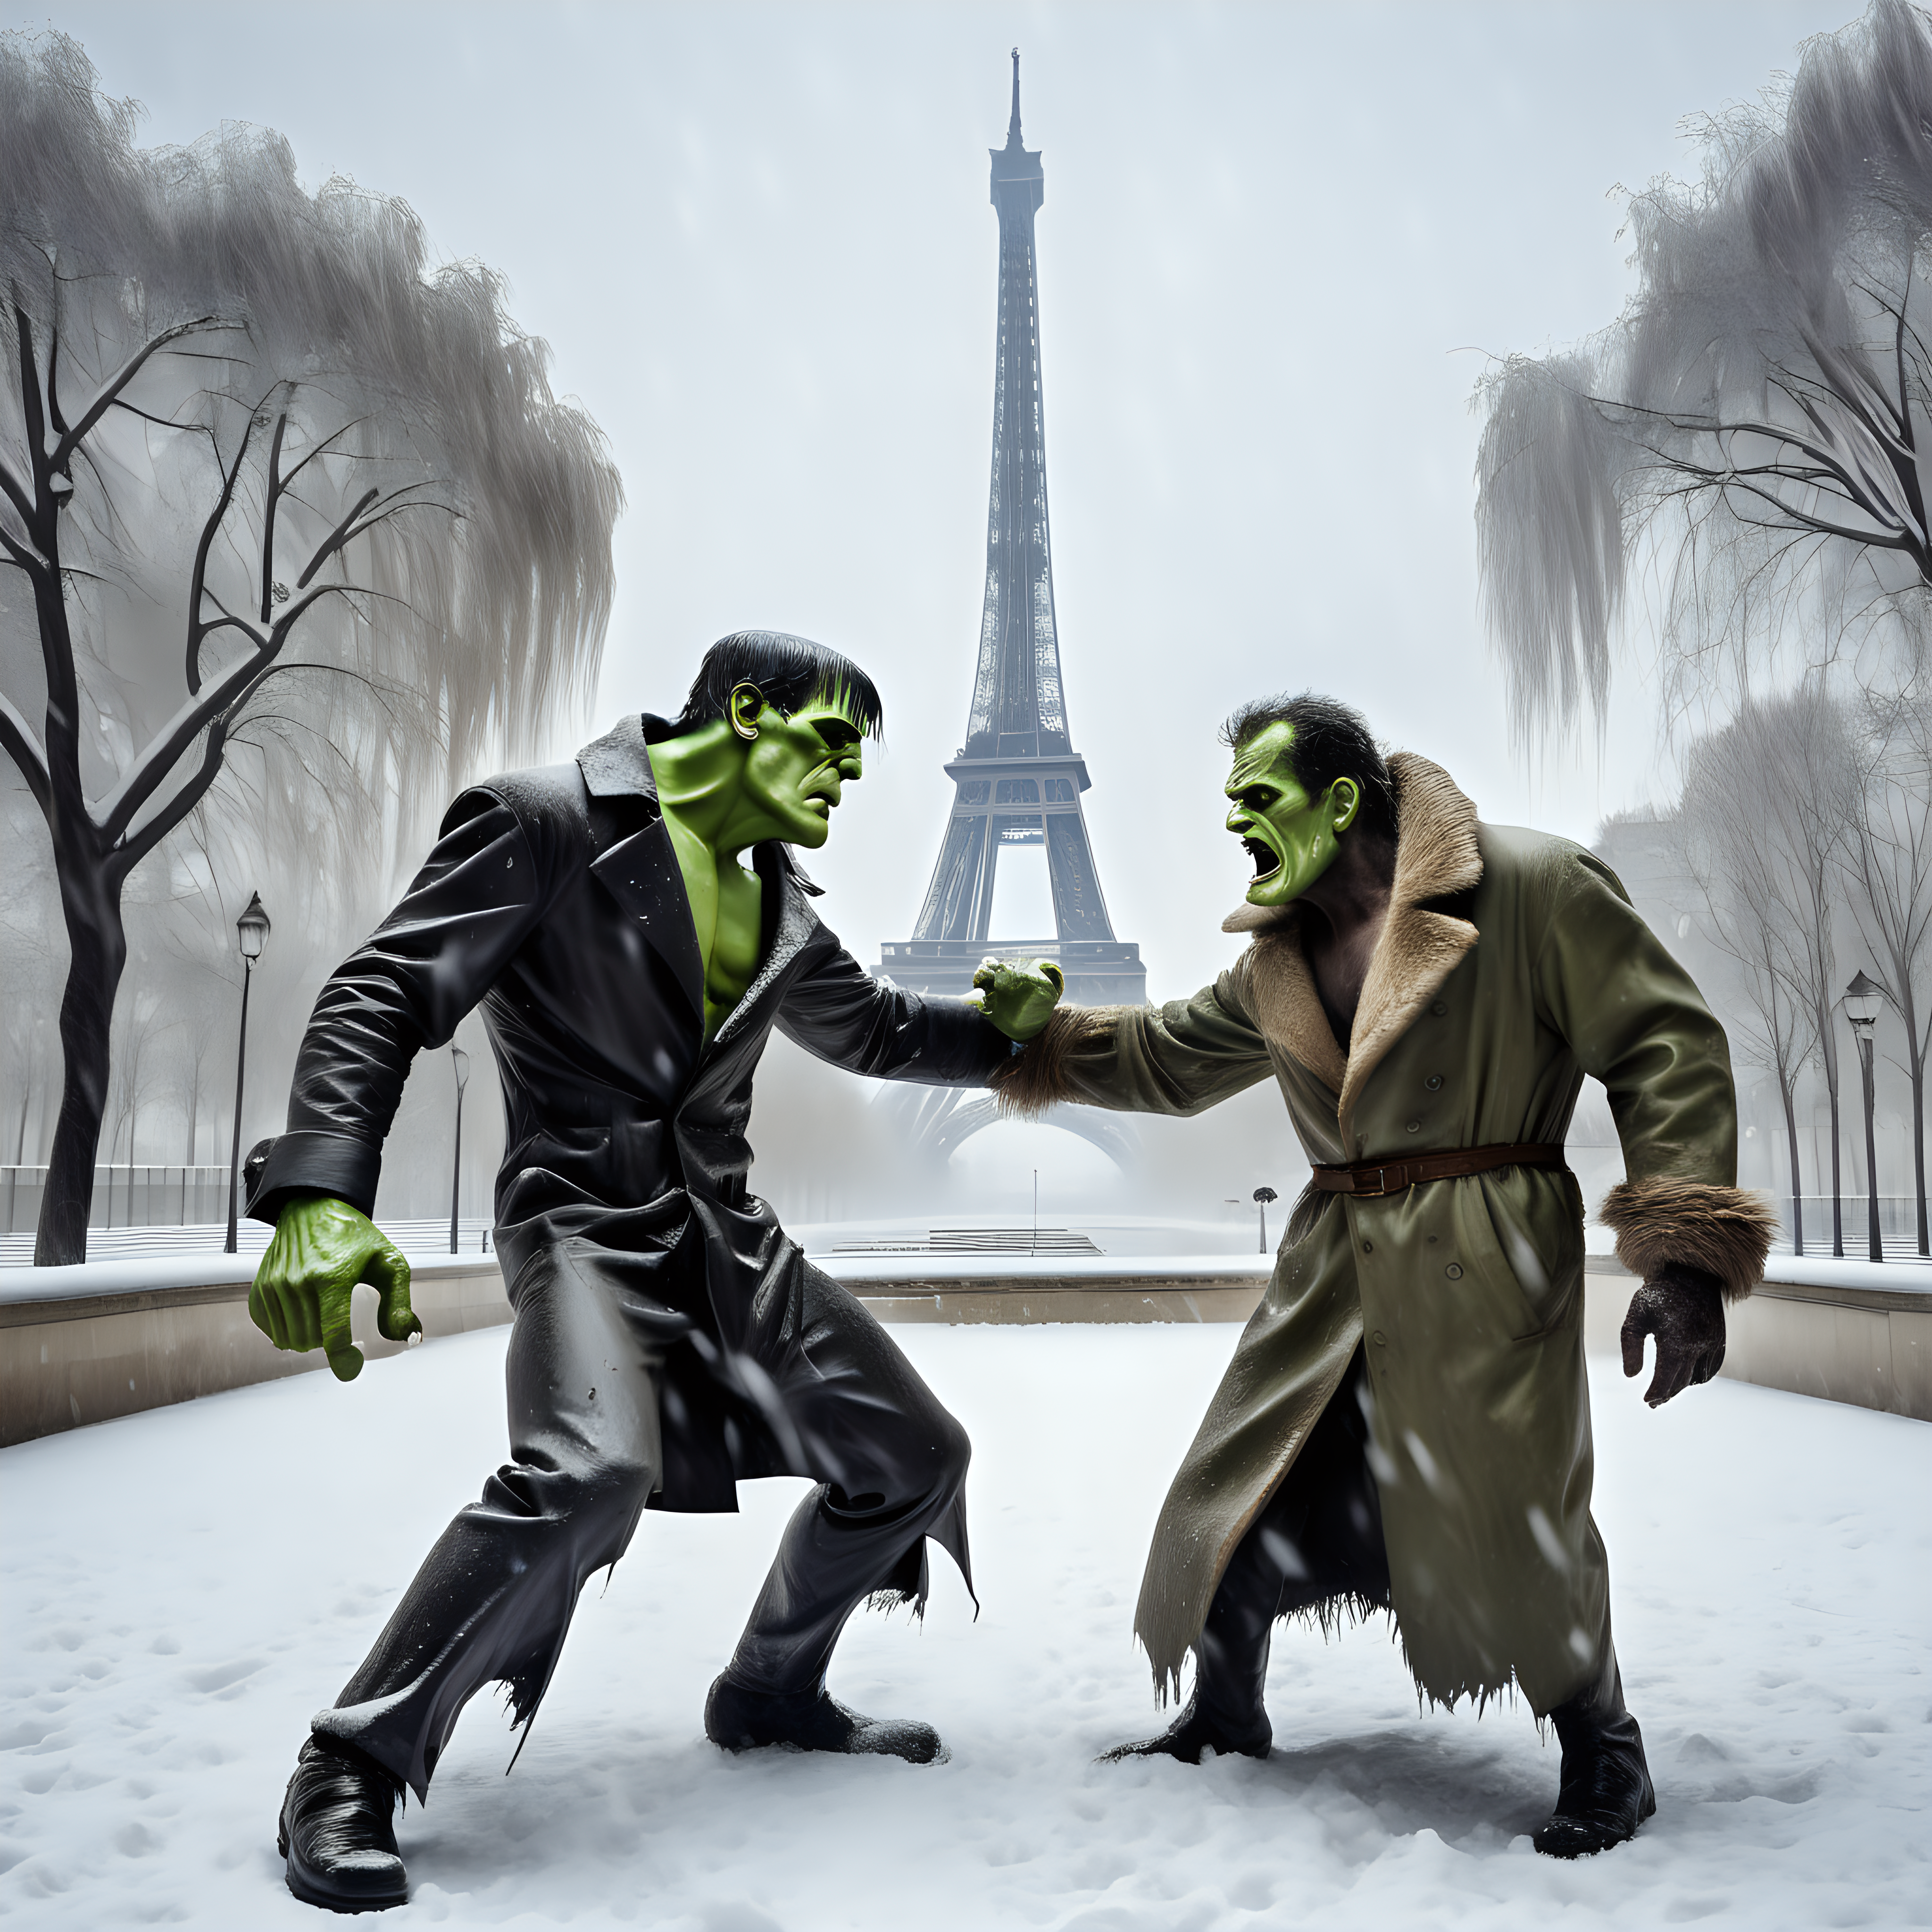 Frankenstein fighting the wolfman in Paris in winter snow storm